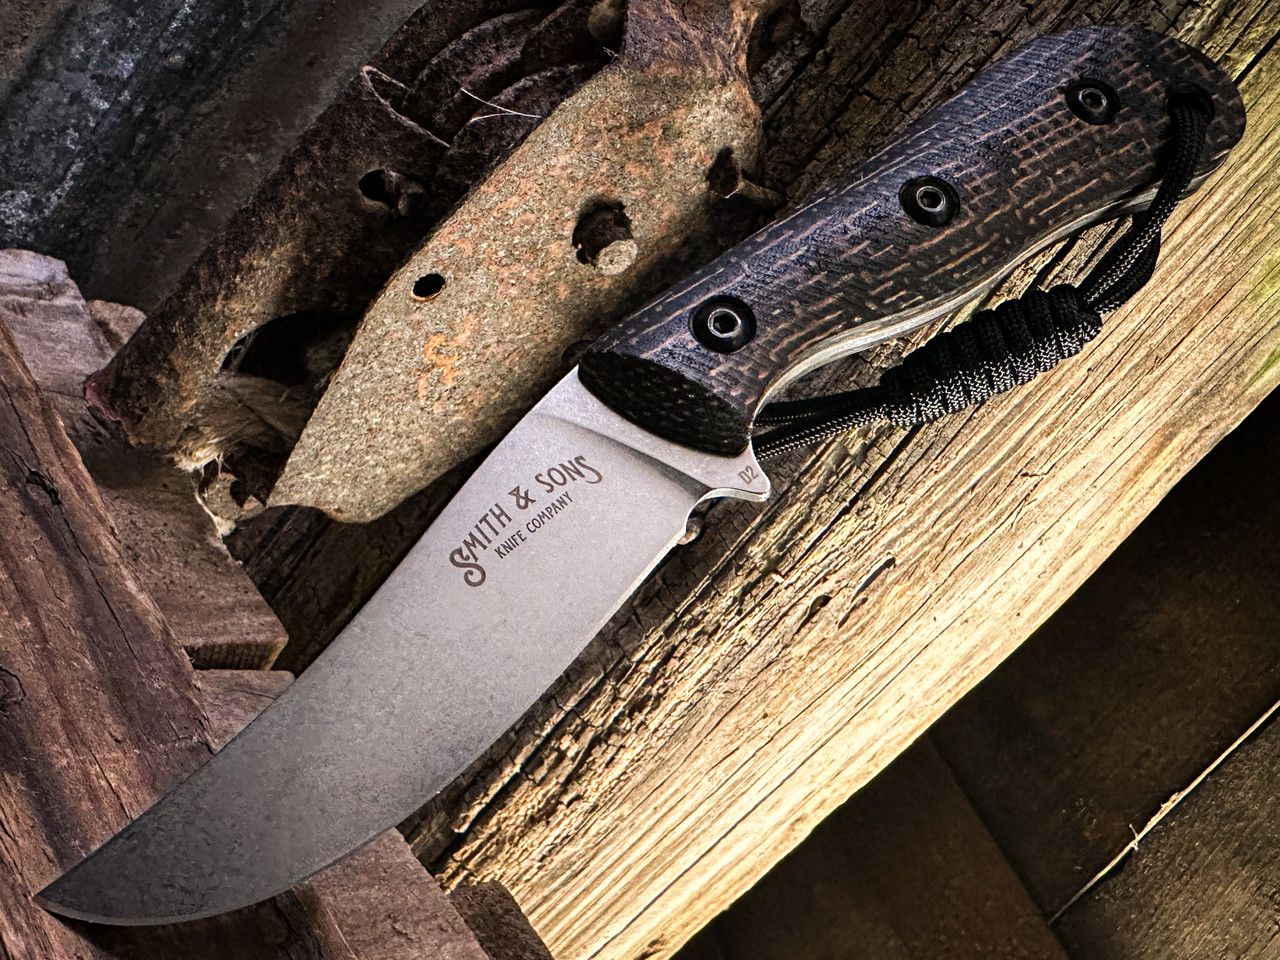 Brown Burlap Micarta knife Scales/Sheets - Micarta Knife Handle Material